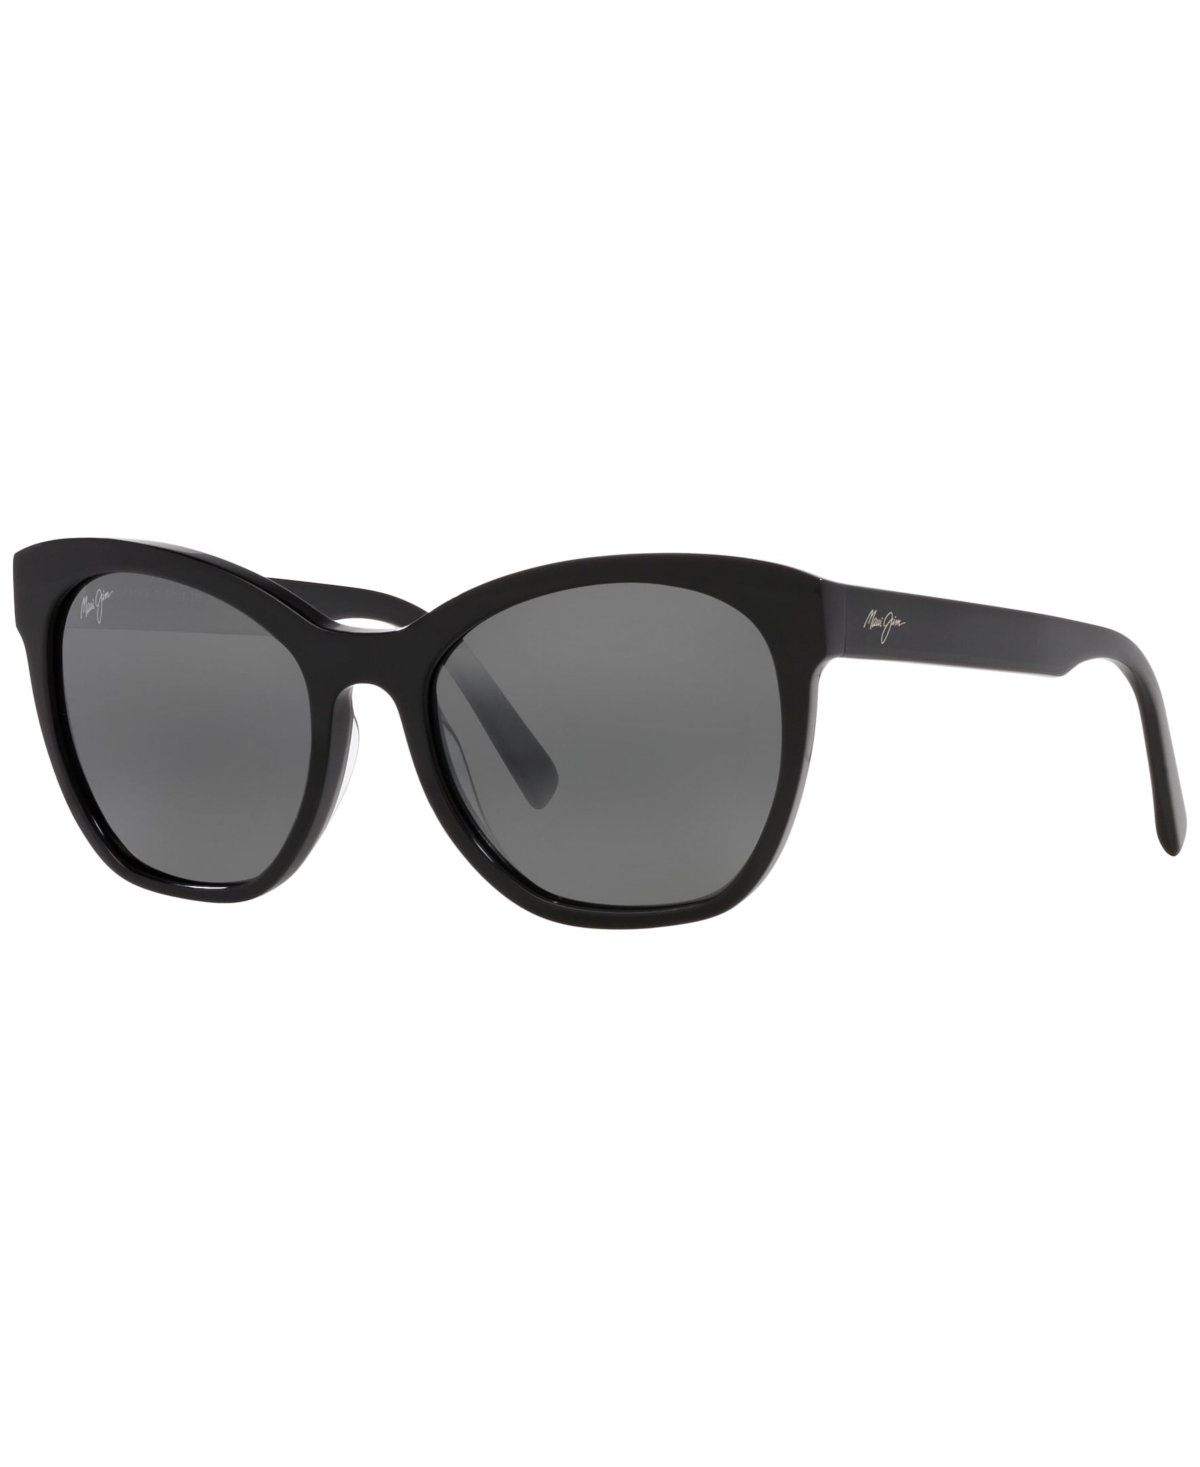 Women's Polarized Sunglasses, MJ00069356-x 56 - Tortoise